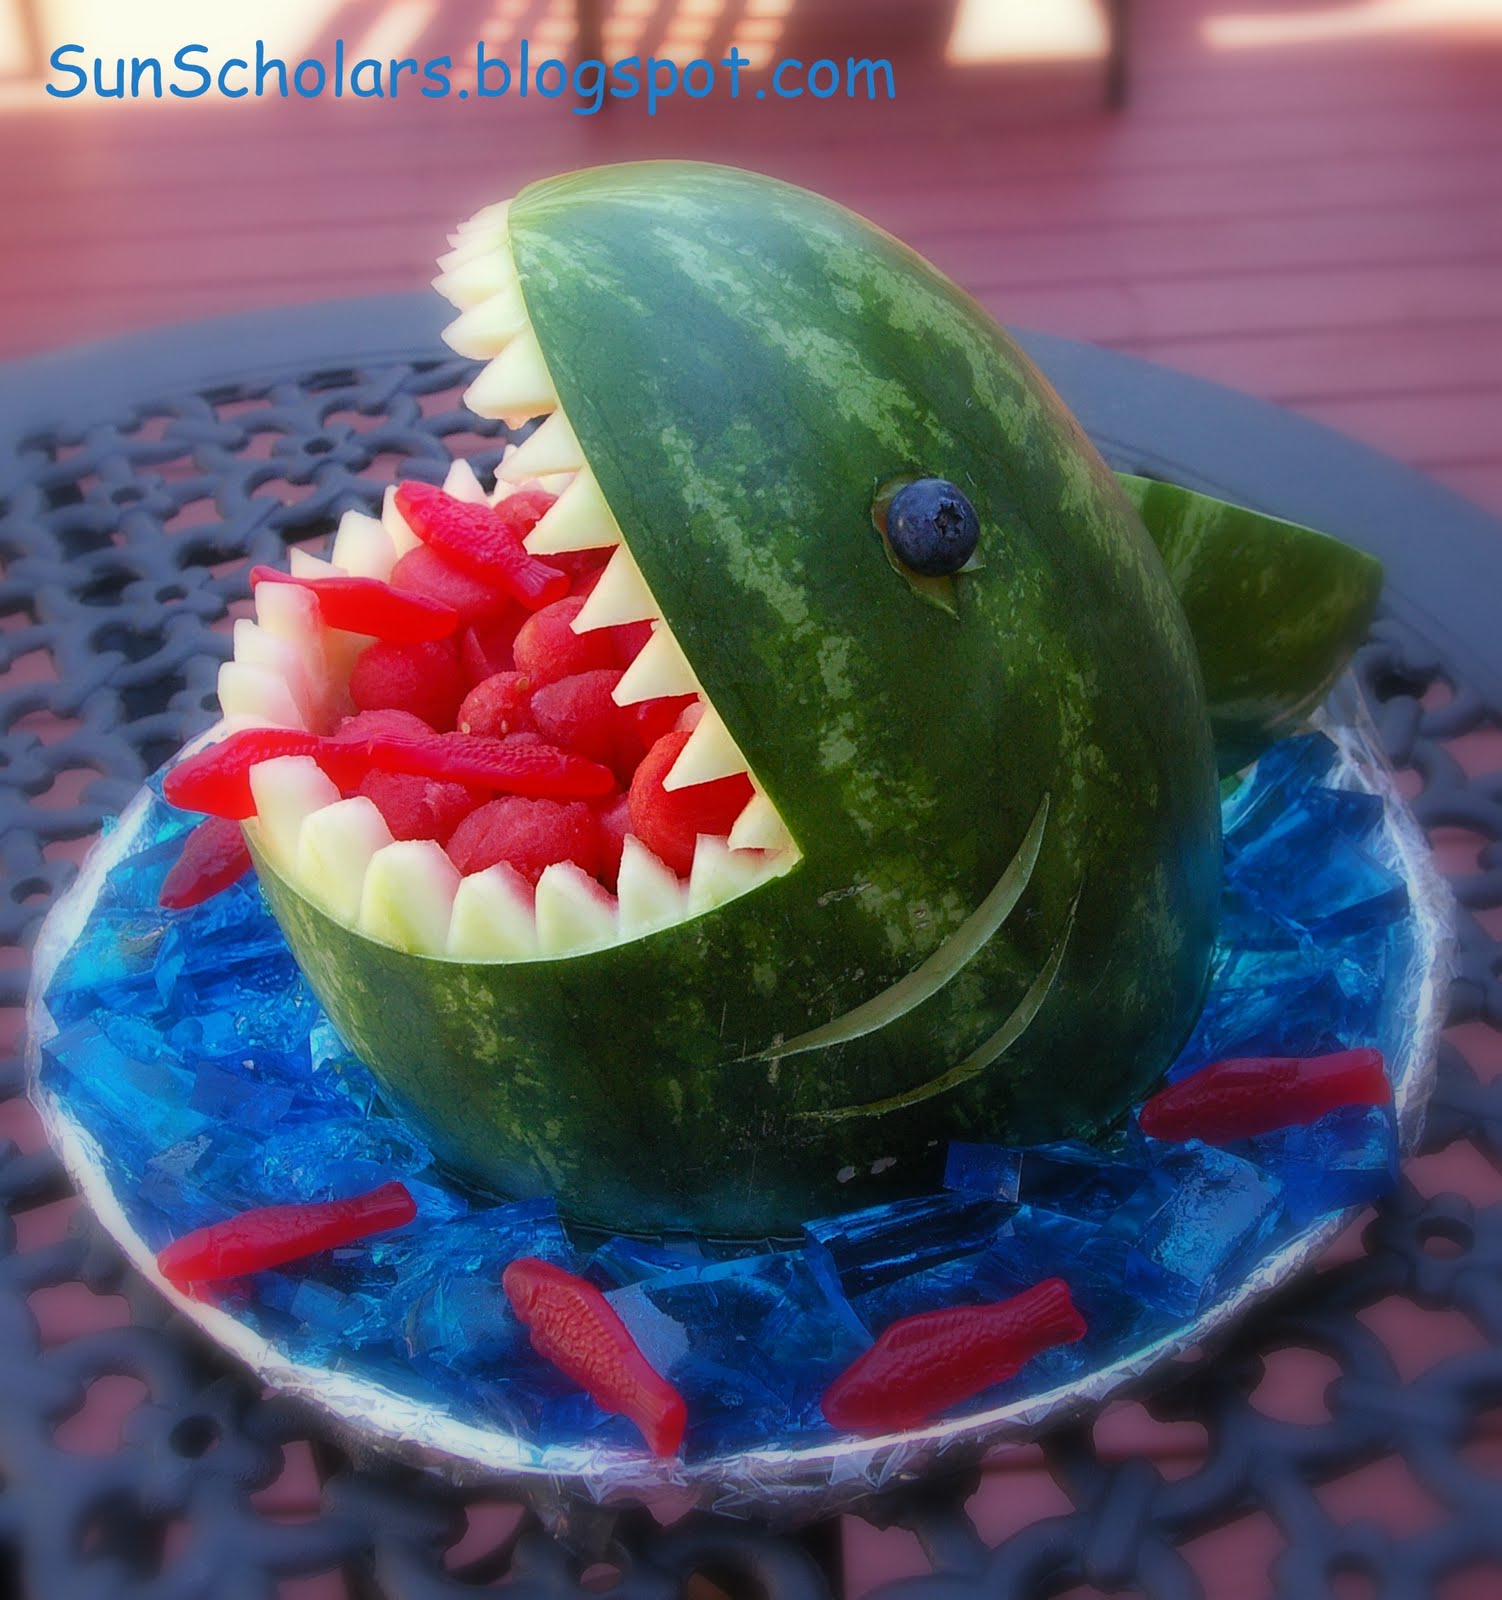 http://dollarstorecrafts.com/wp-content/uploads/2011/06/watermelon-shark-snack.jpg